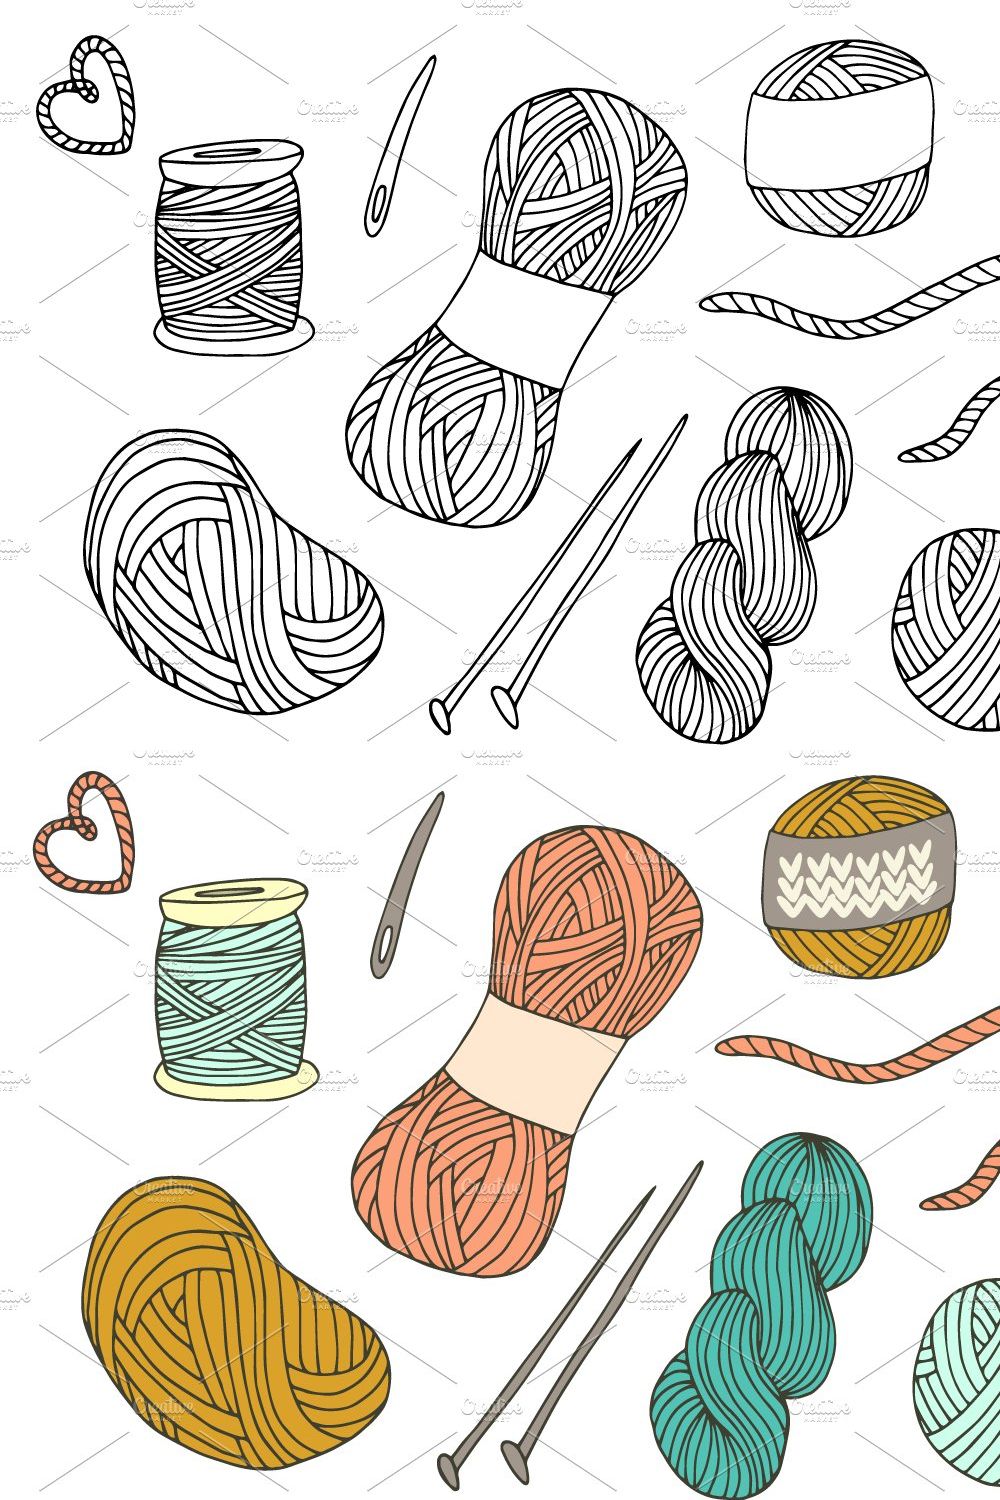 -50% OFF! Yarn balls hand drawn set pinterest preview image.